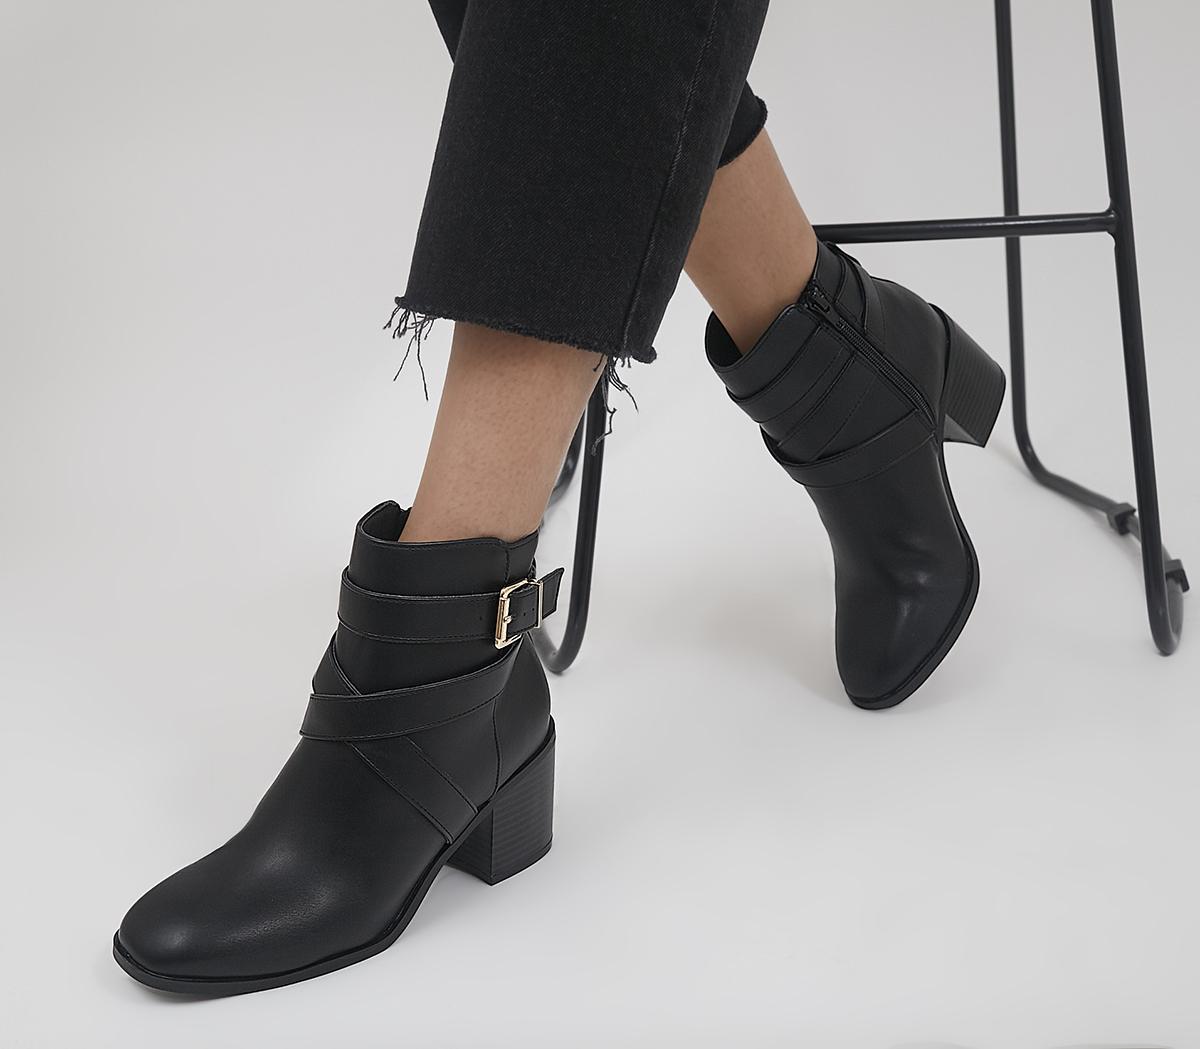 OFFICE Artini Cross Strap Block Heeled Ankle Boots Black - Women's ...